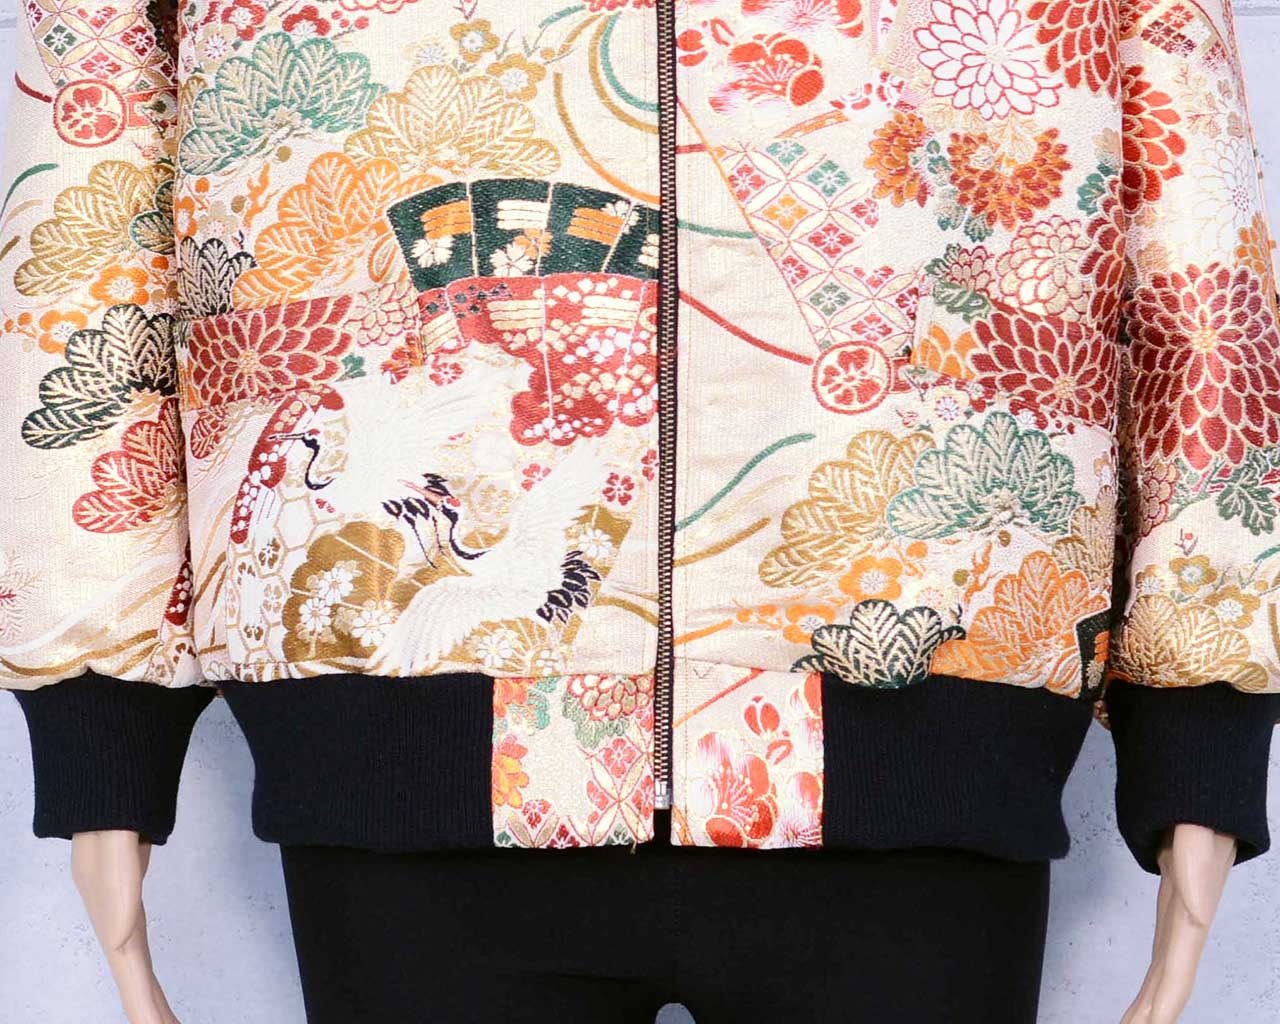 Kimono remake blouson for good luck